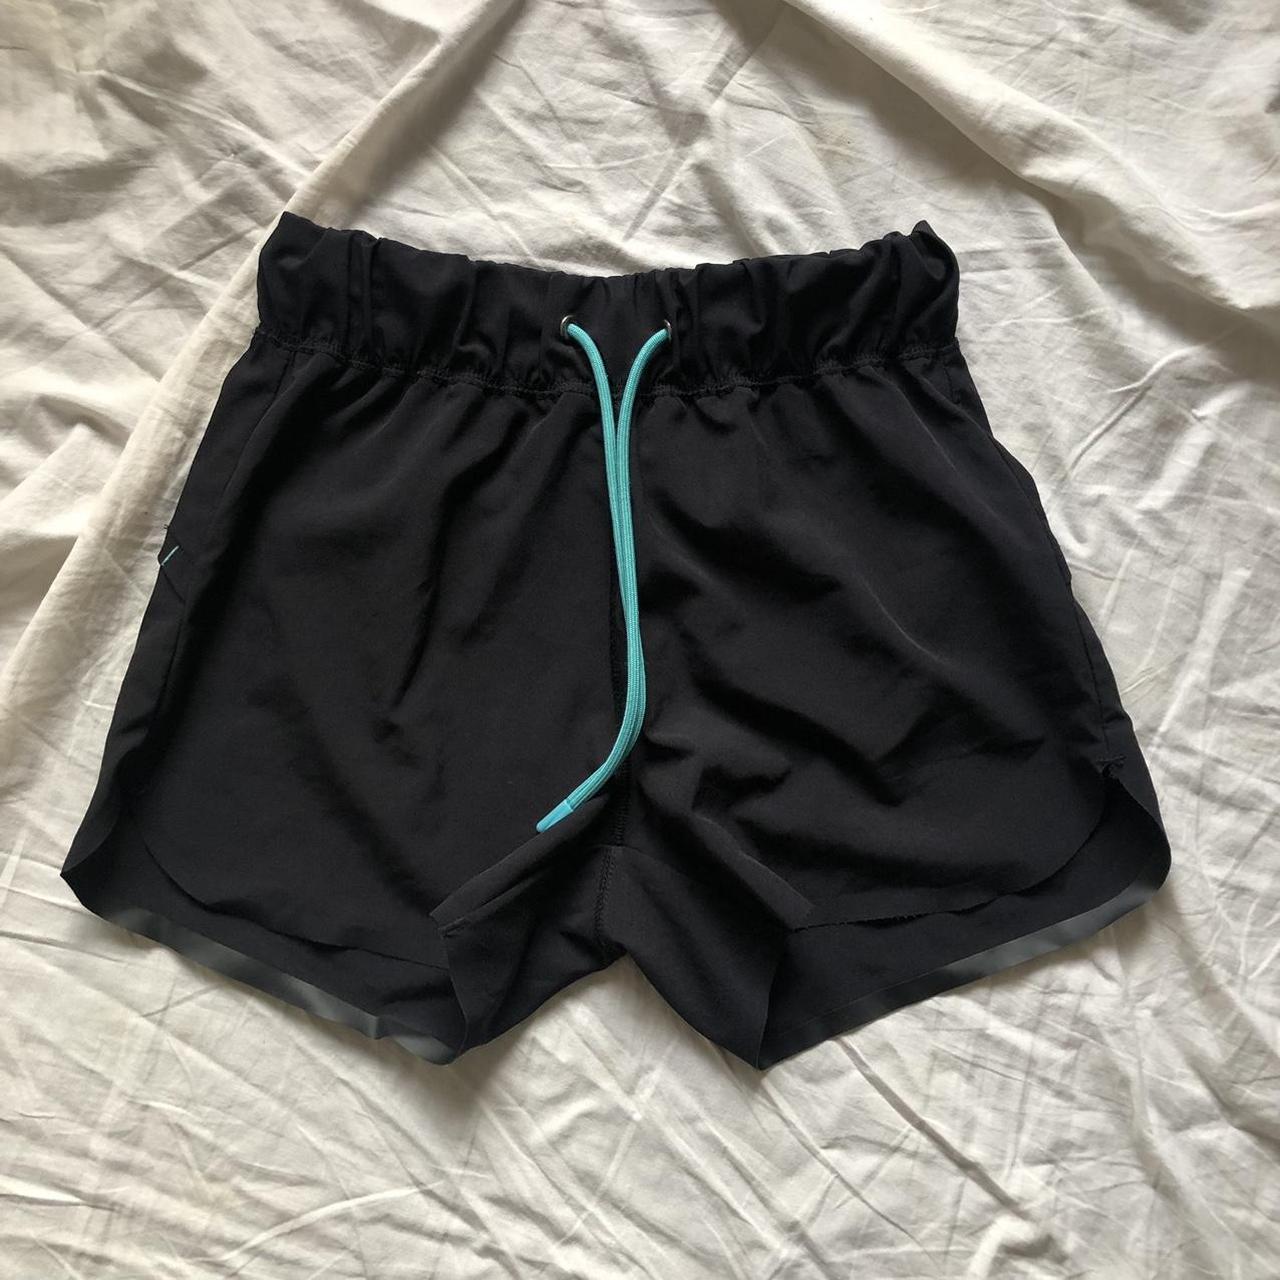 black sport shorts XS waist: 32 - 40 cm, lenght:... - Depop